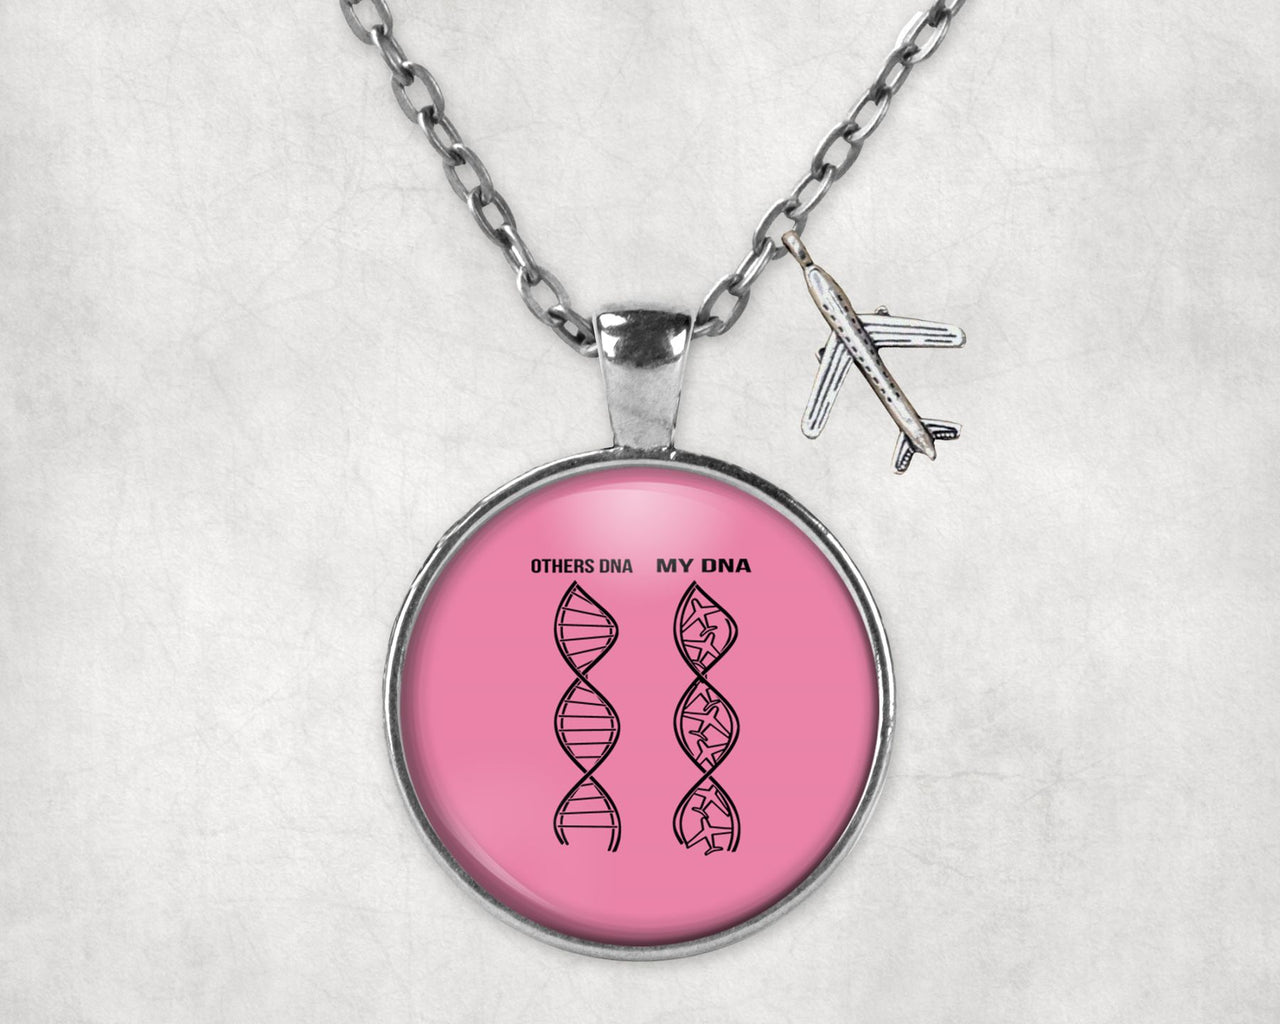 Aviation DNA Designed Necklaces